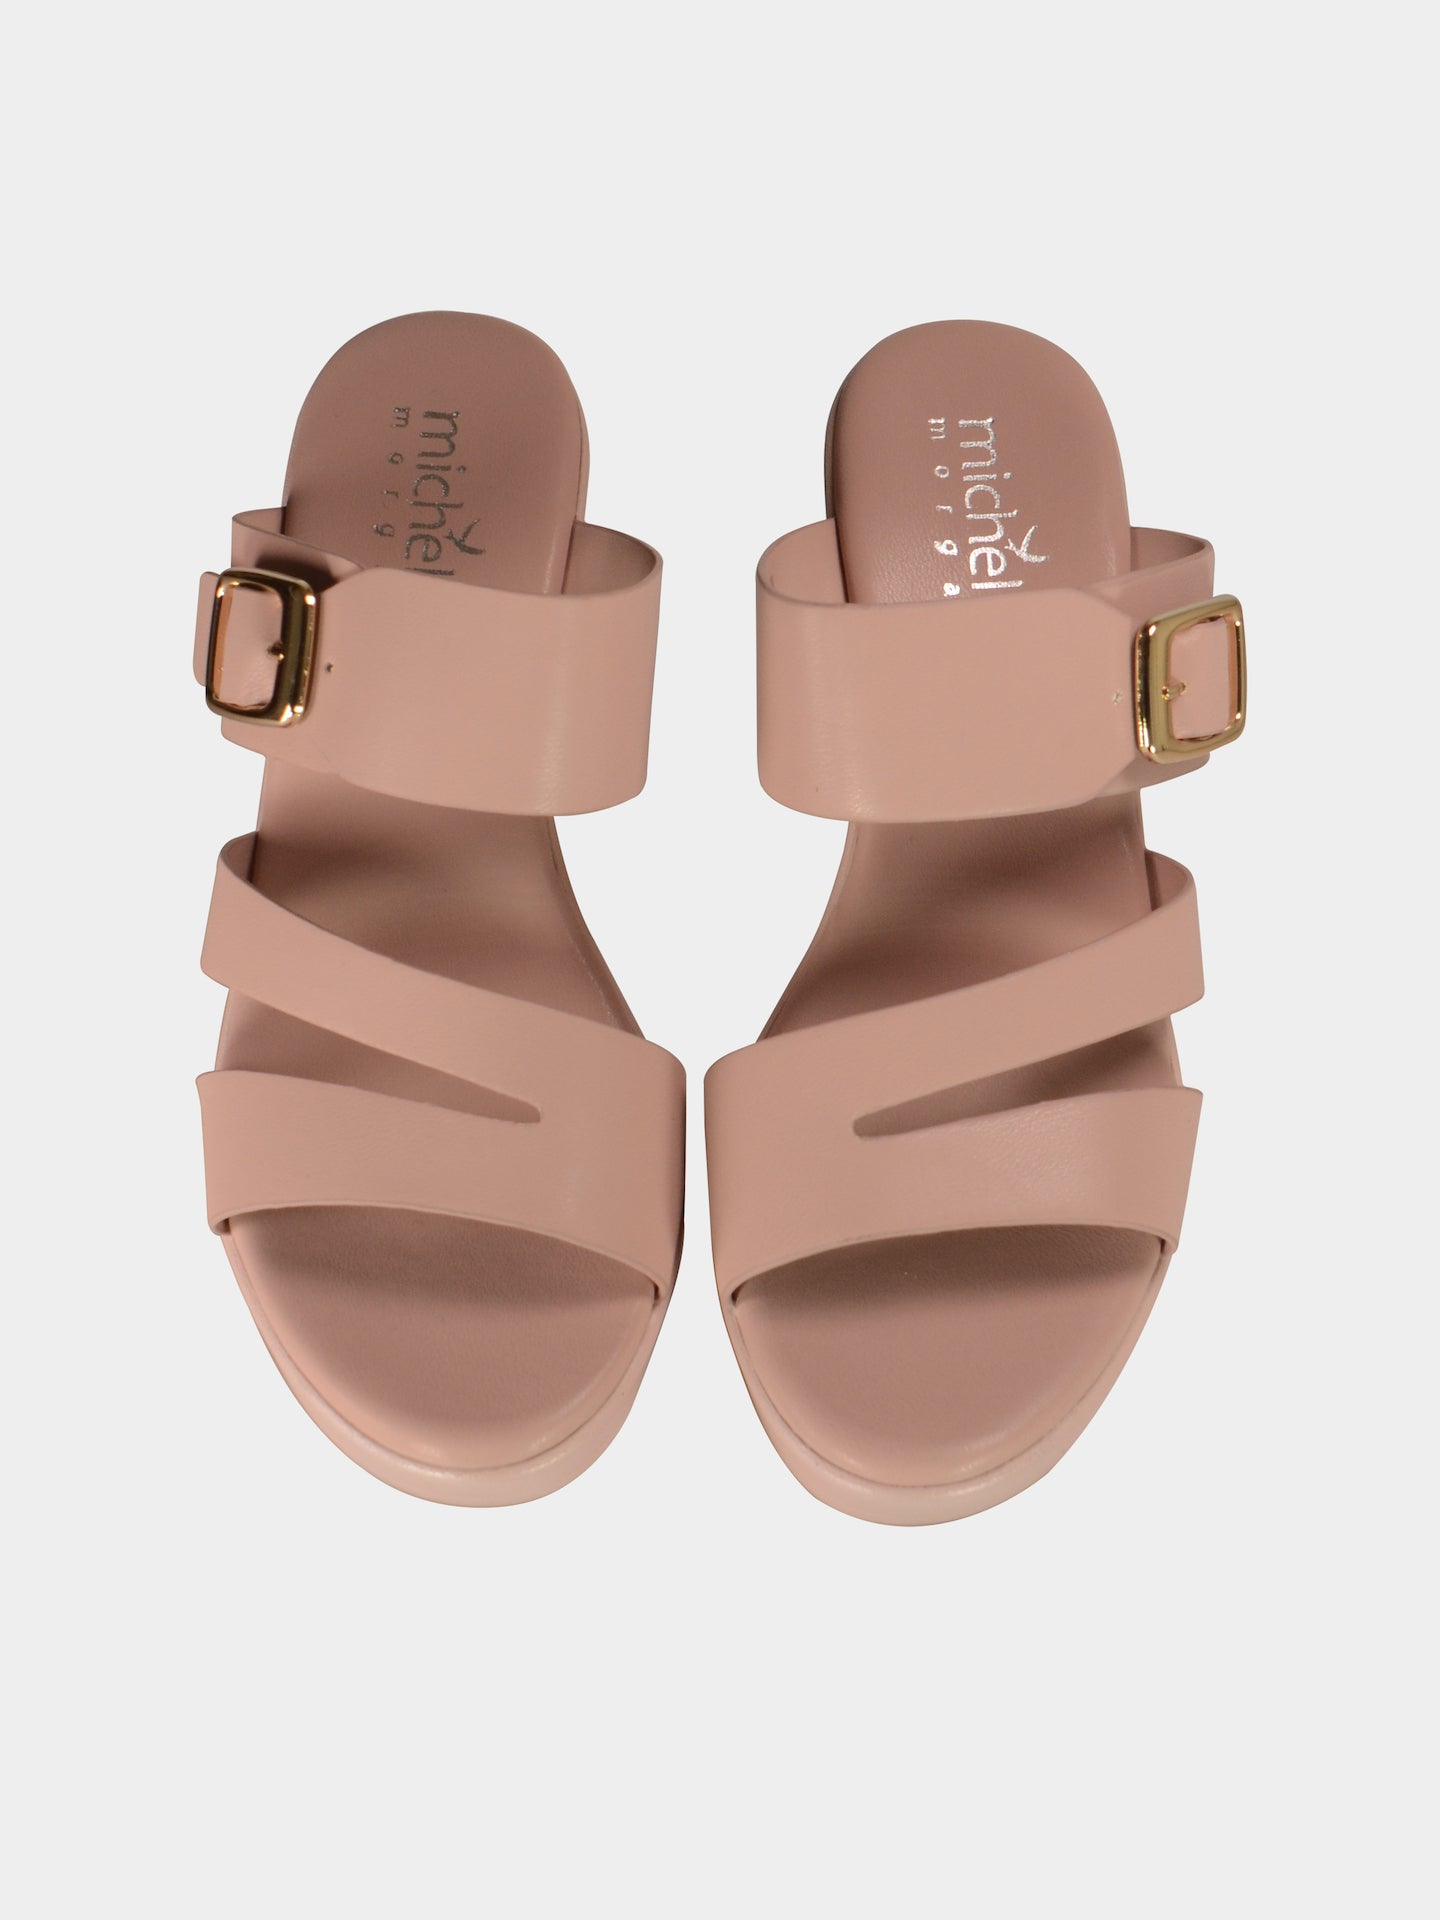 Michelle Morgan 913RJ163 Women's Heeled Sandals #color_Pink